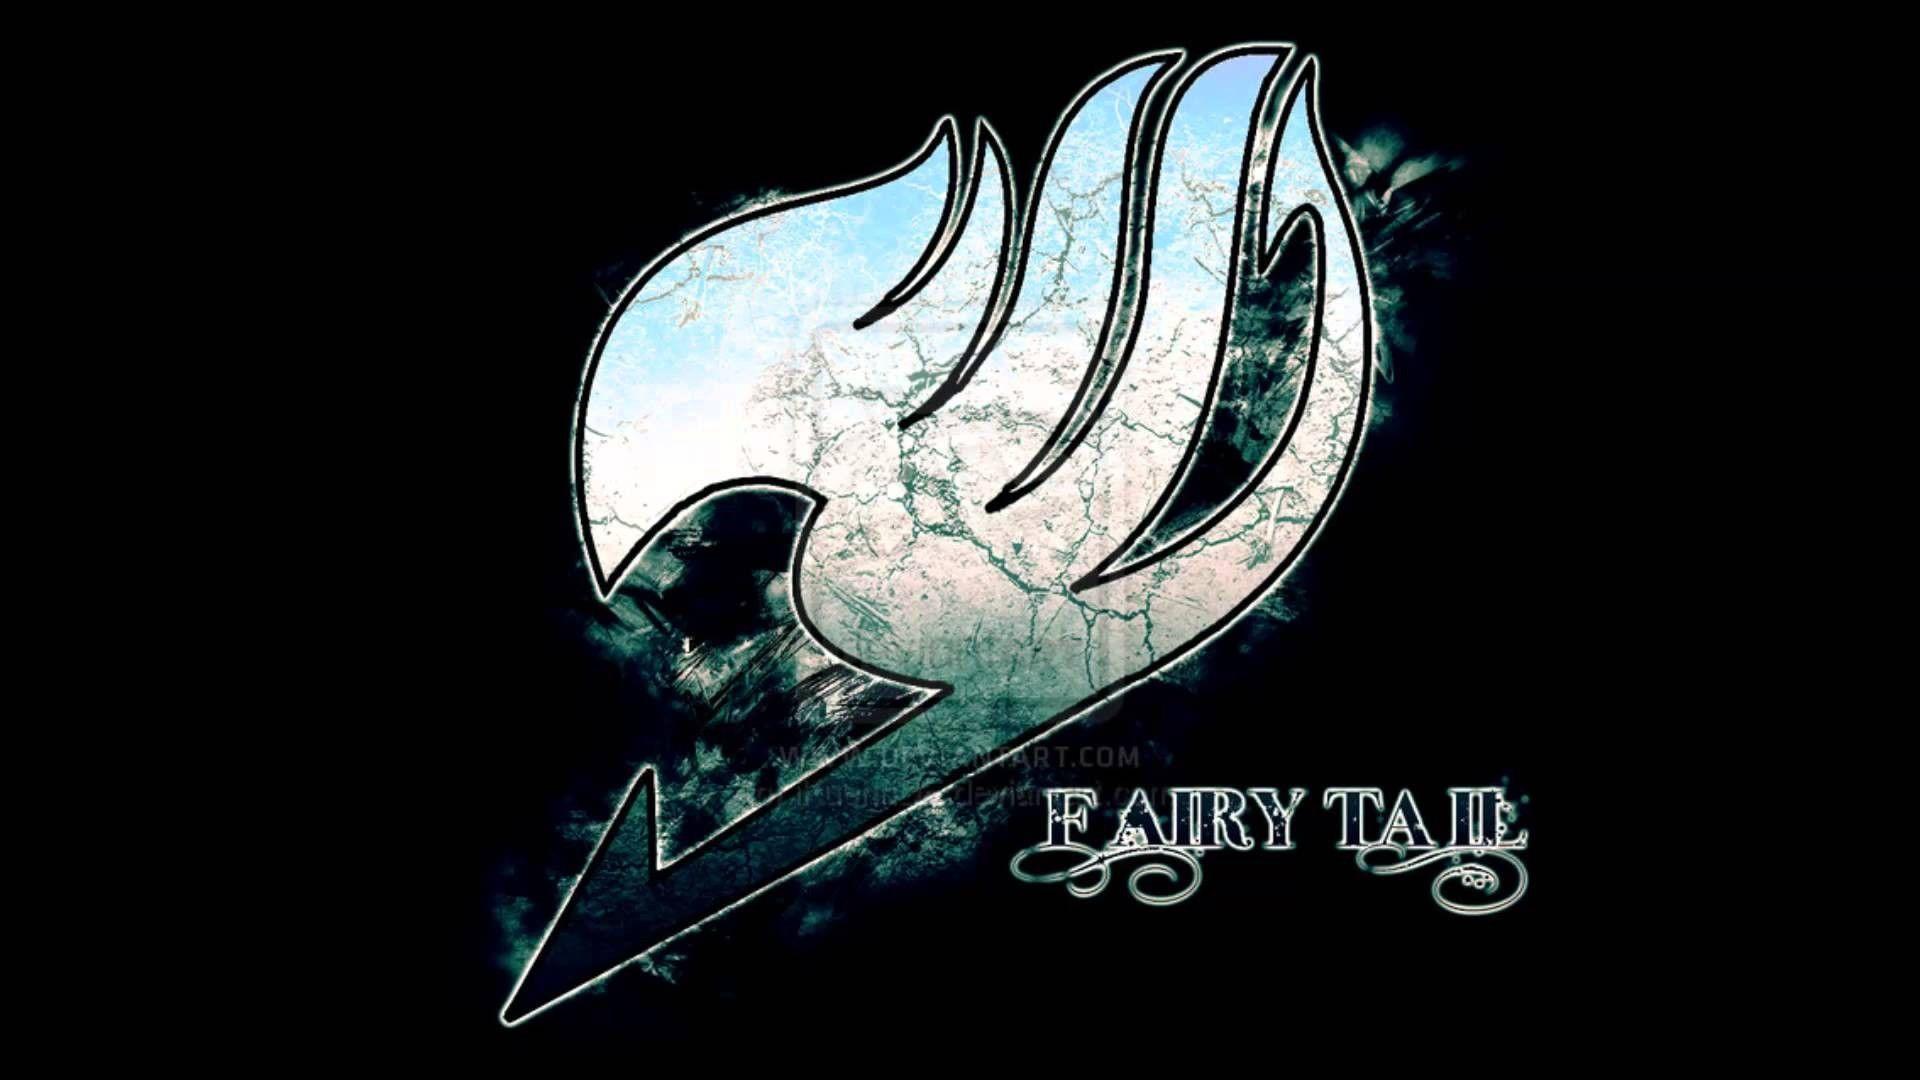 Fairy Tail Logo fond d'écran.com Fonds mondial